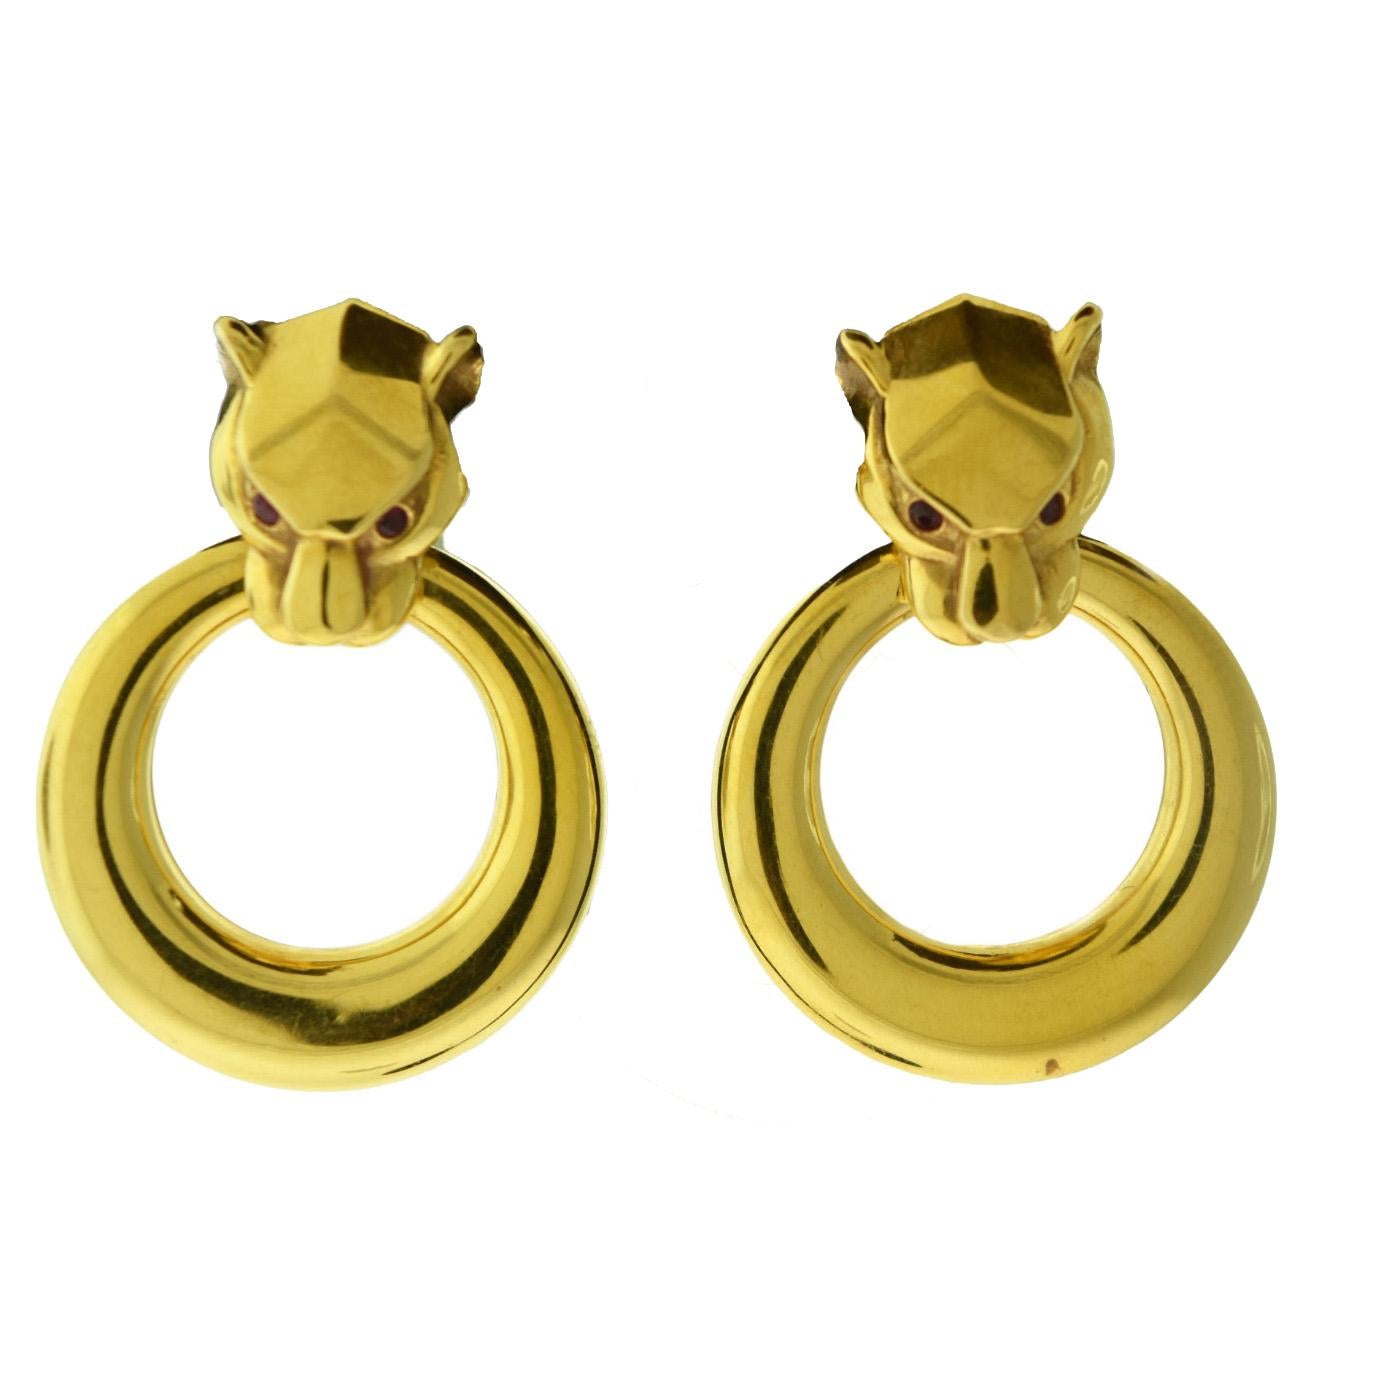 Brilliance Jewels, Miami
Questions? Call Us Anytime!
786,482,8100

Style: Door Knocker Hoop Earrings

Metal Type: Yellow Gold

Metal Purity: 18k

Stones: Ruby (eyes)

Total Item Weight (grams): 8.1

Door Knocker Diameter: 0.75 inches

Panther